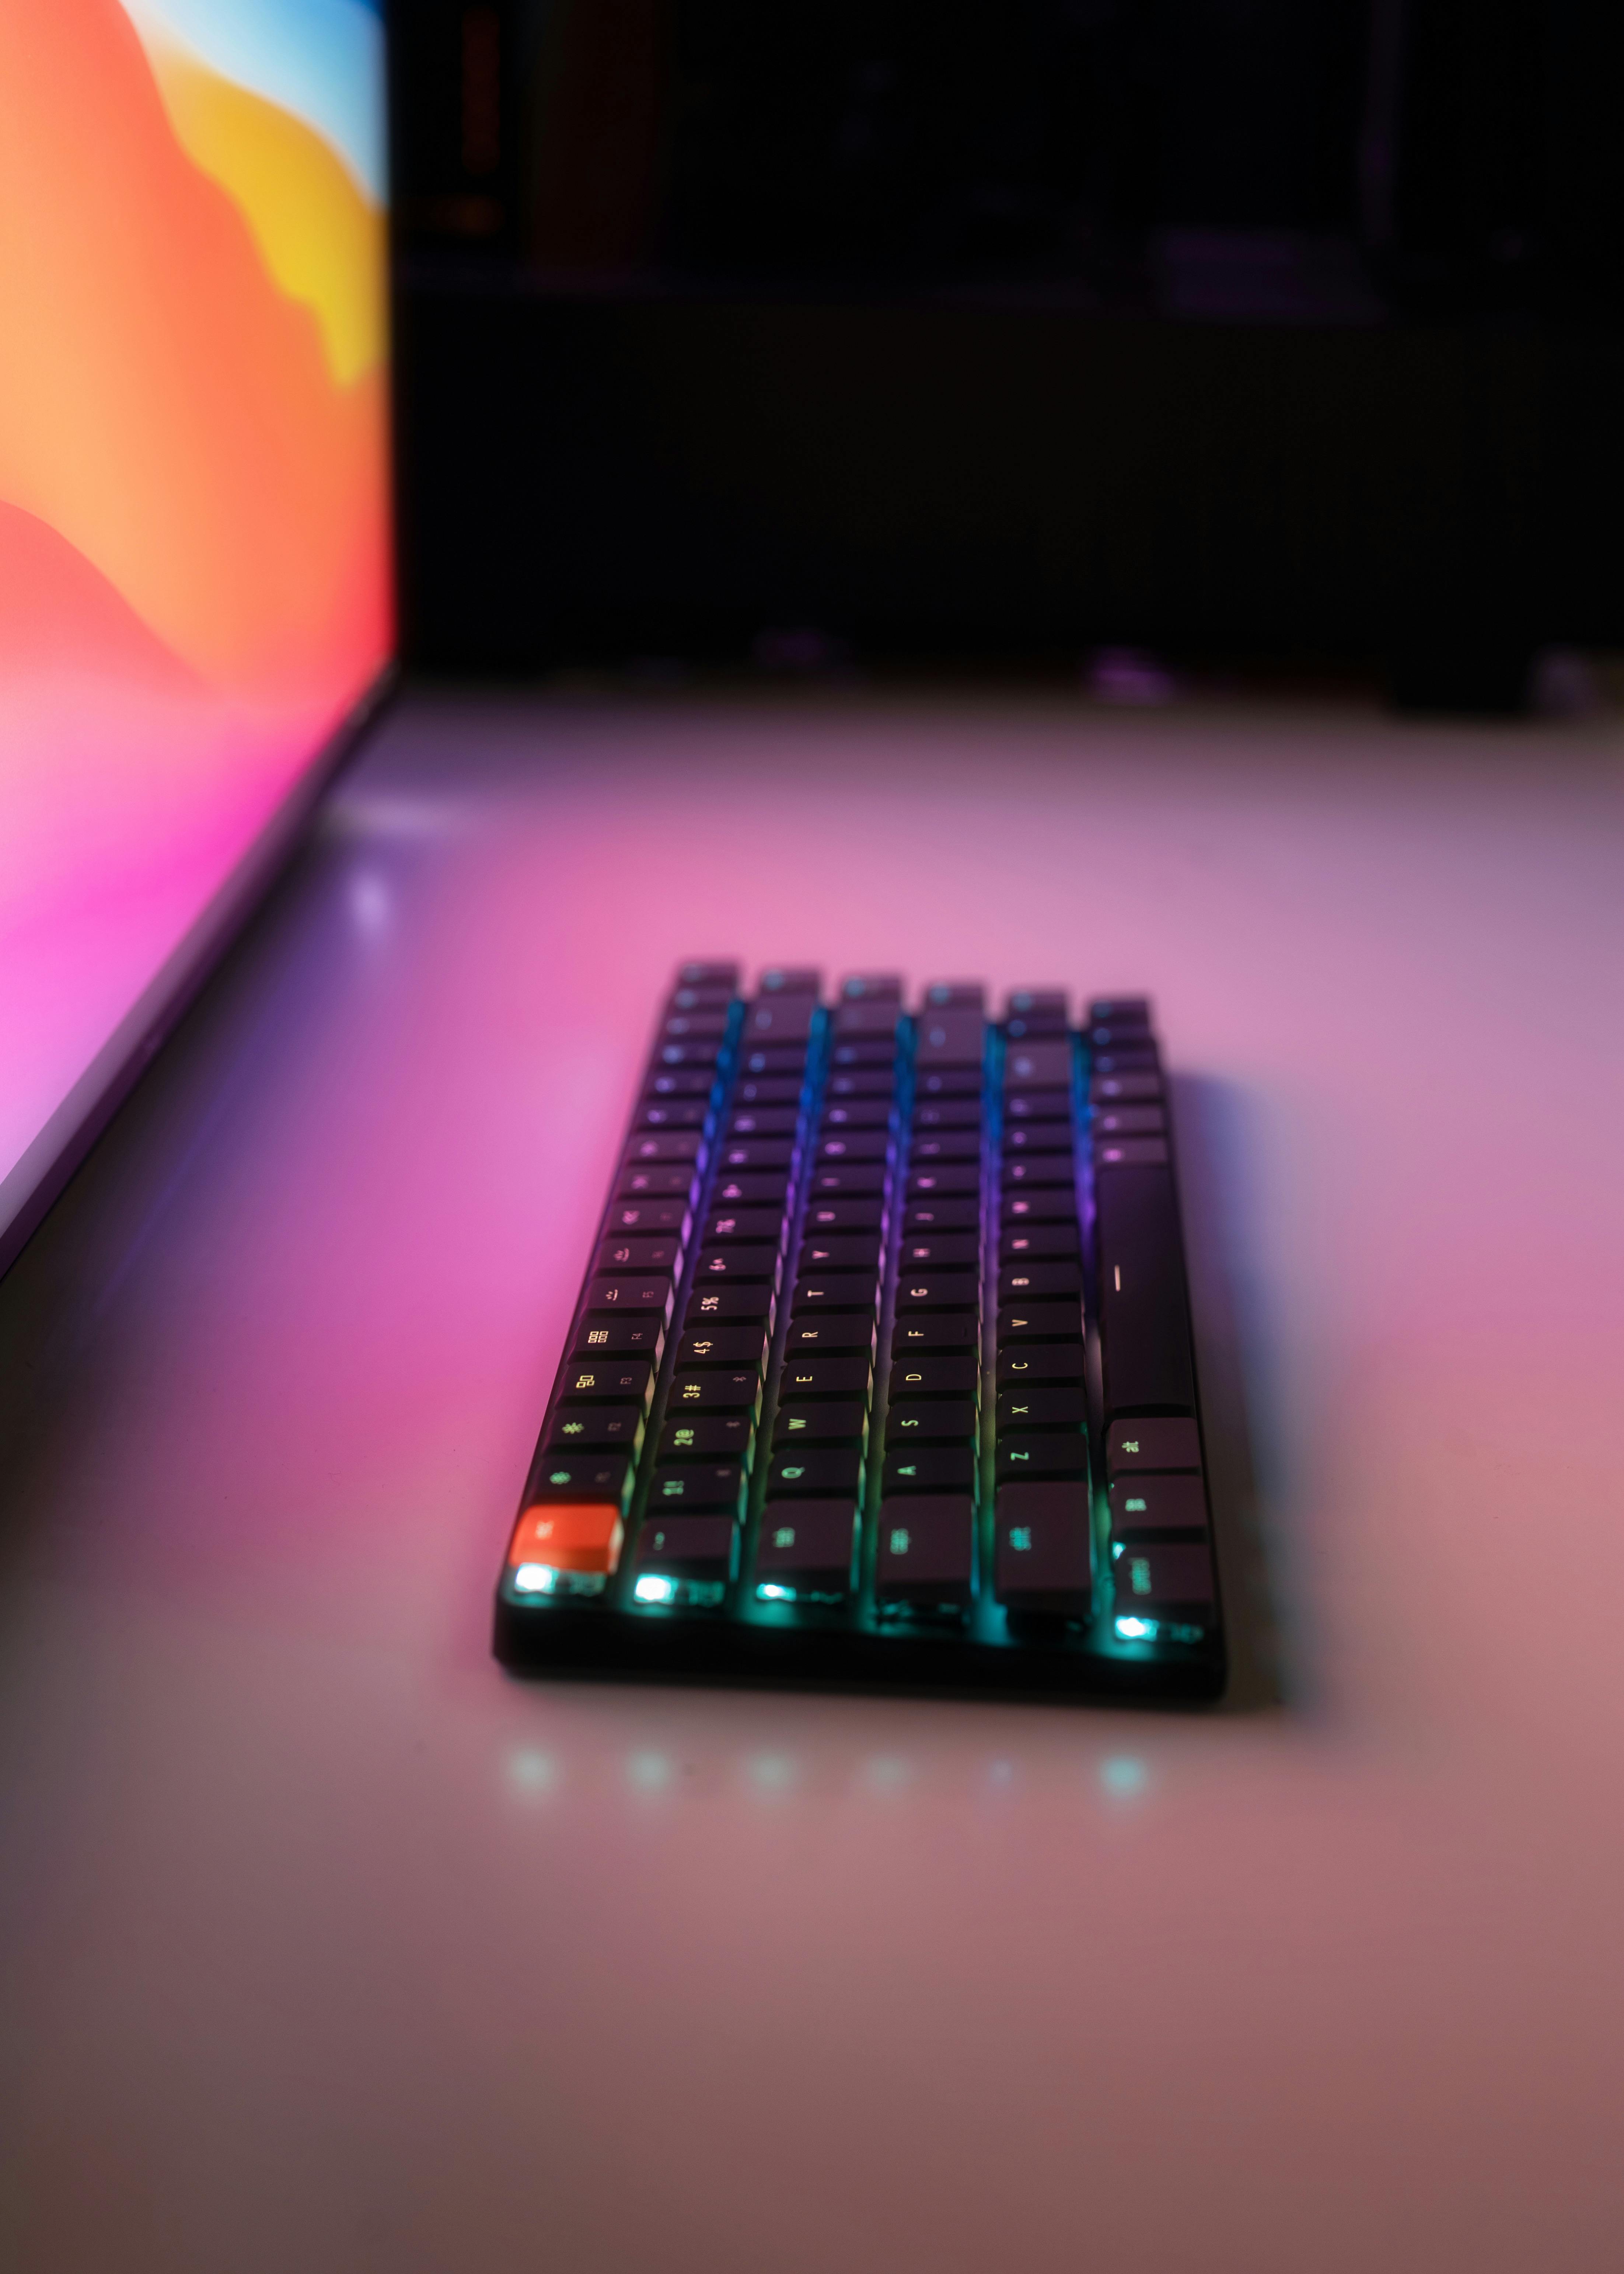 pc keyboard illuminated by screen glowing pink safari wallpaper